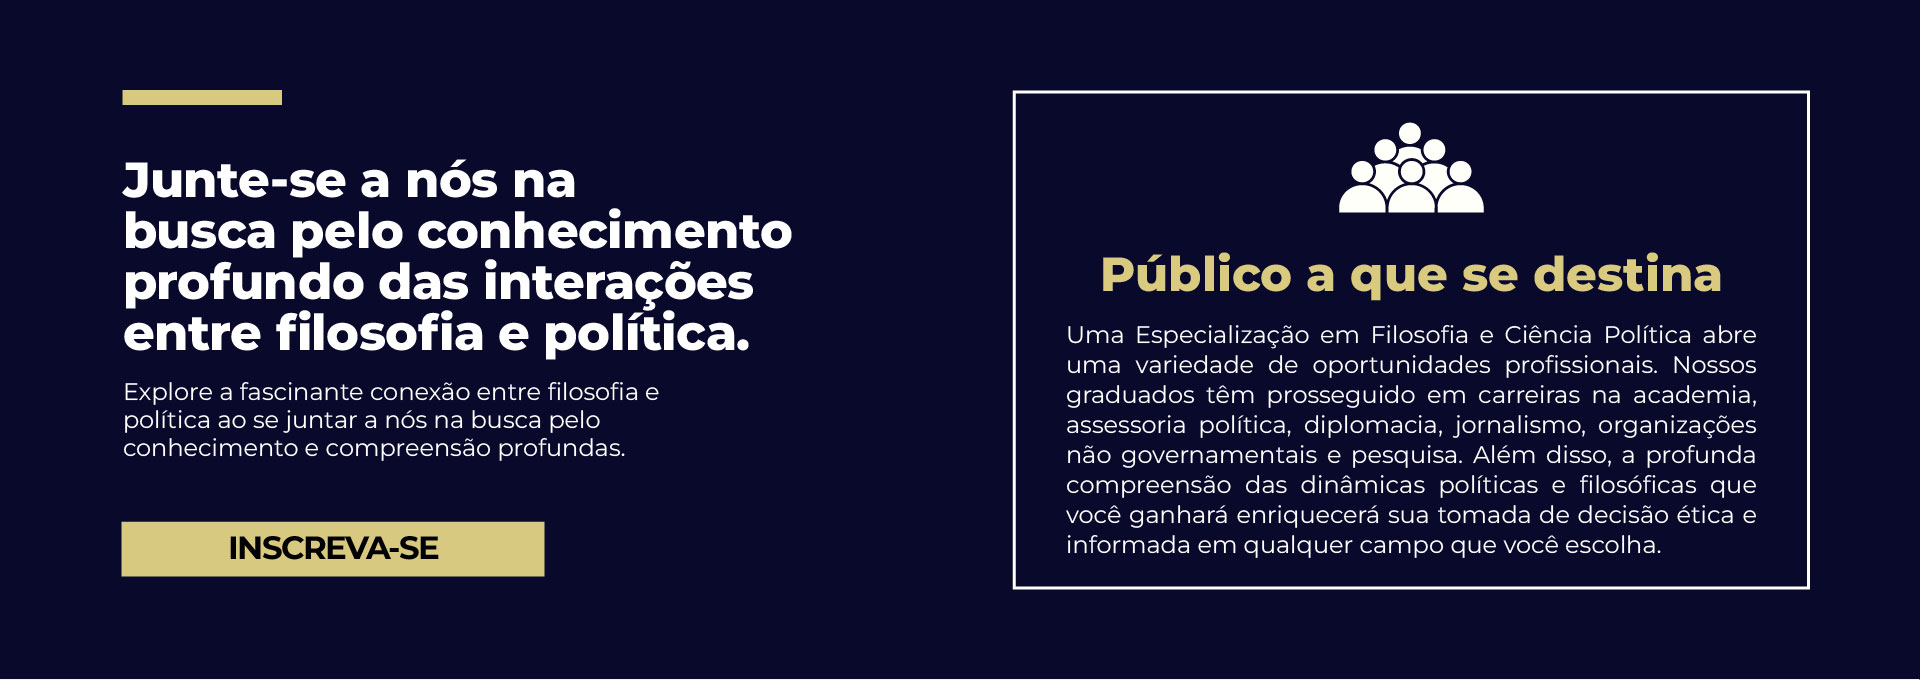 Ciências-Politicas_Prancheta_1_cópia.jpg